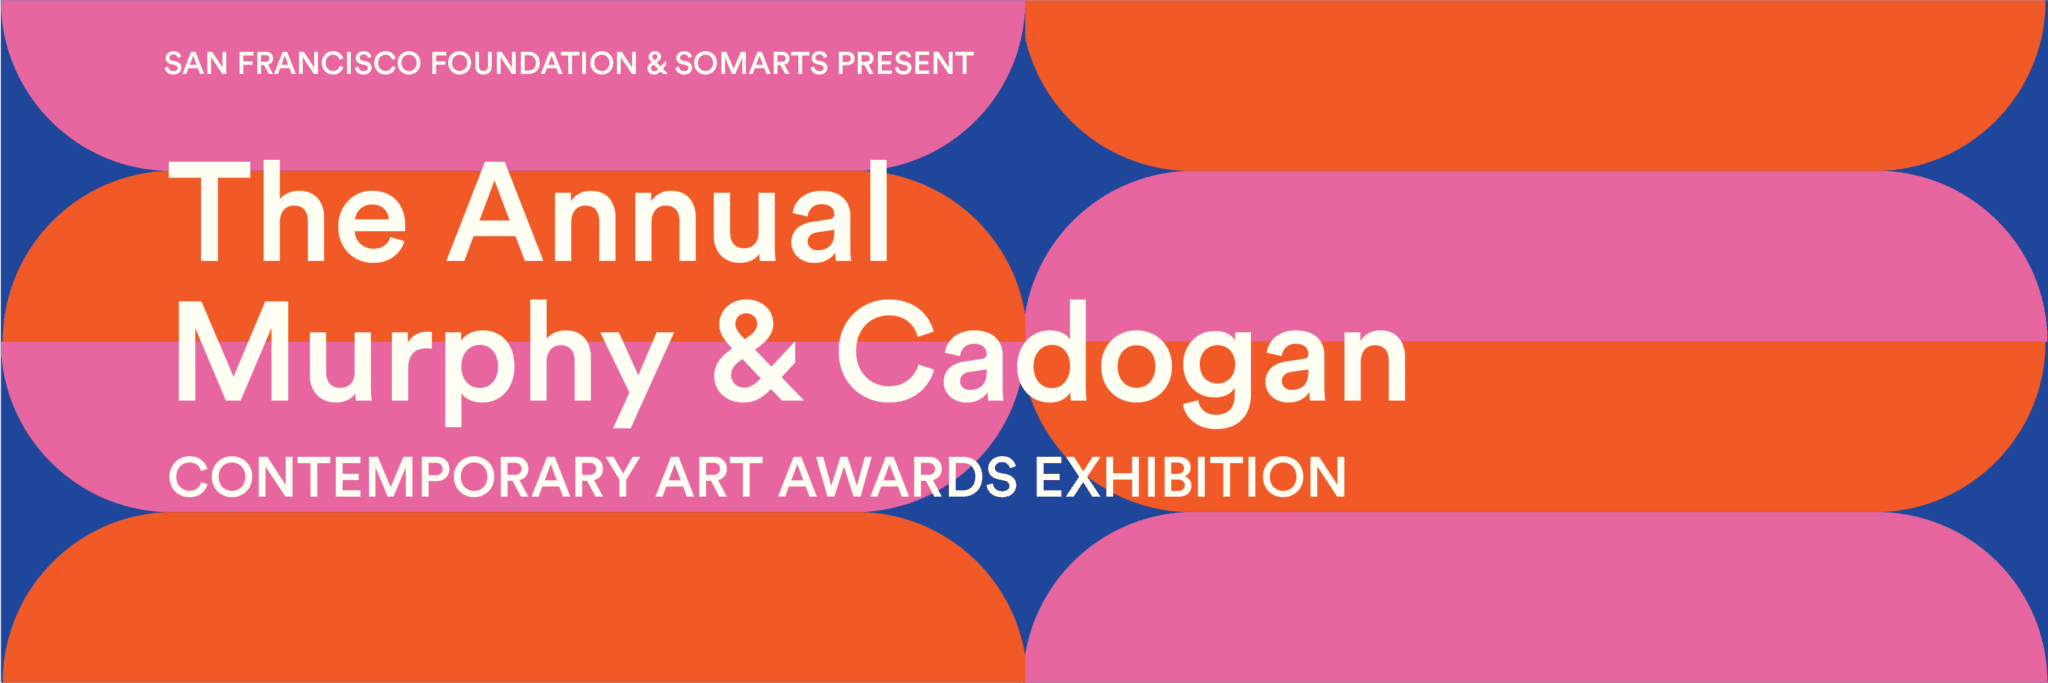 The Annual Murphy & Cadogan Art Awards Exhibition